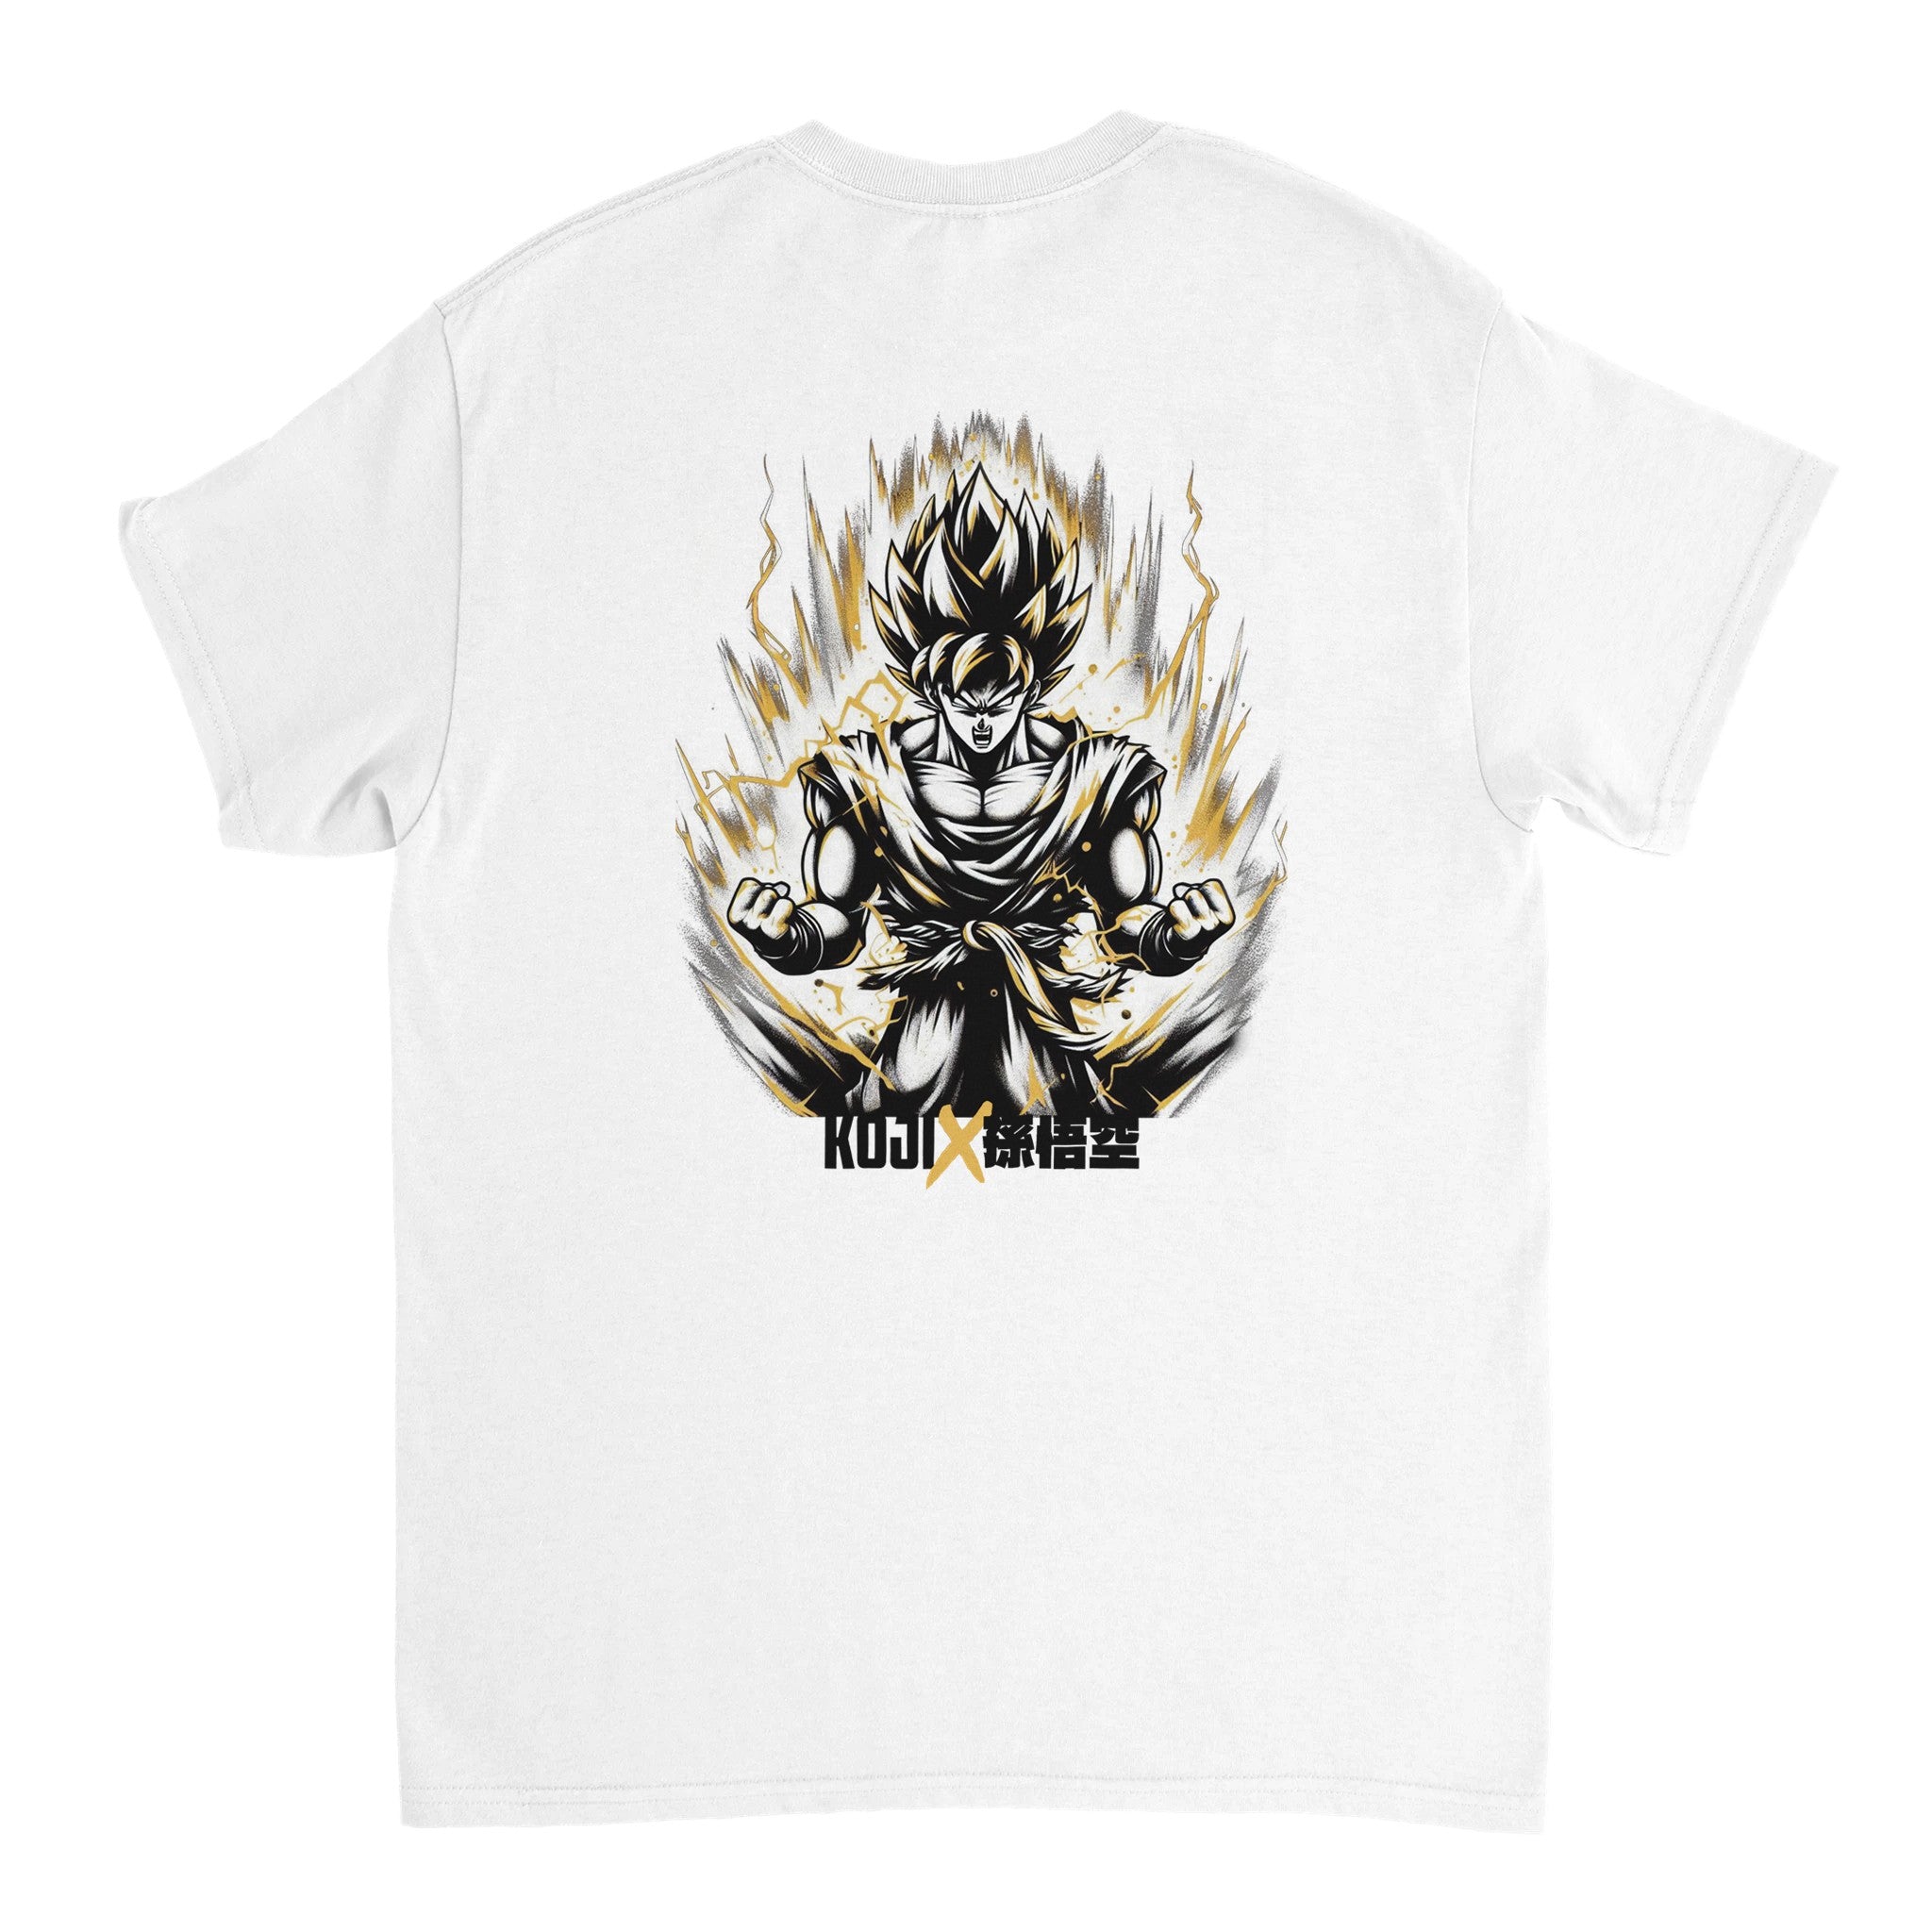 Koji x Dragonball - Saiyan Goku T-shirt